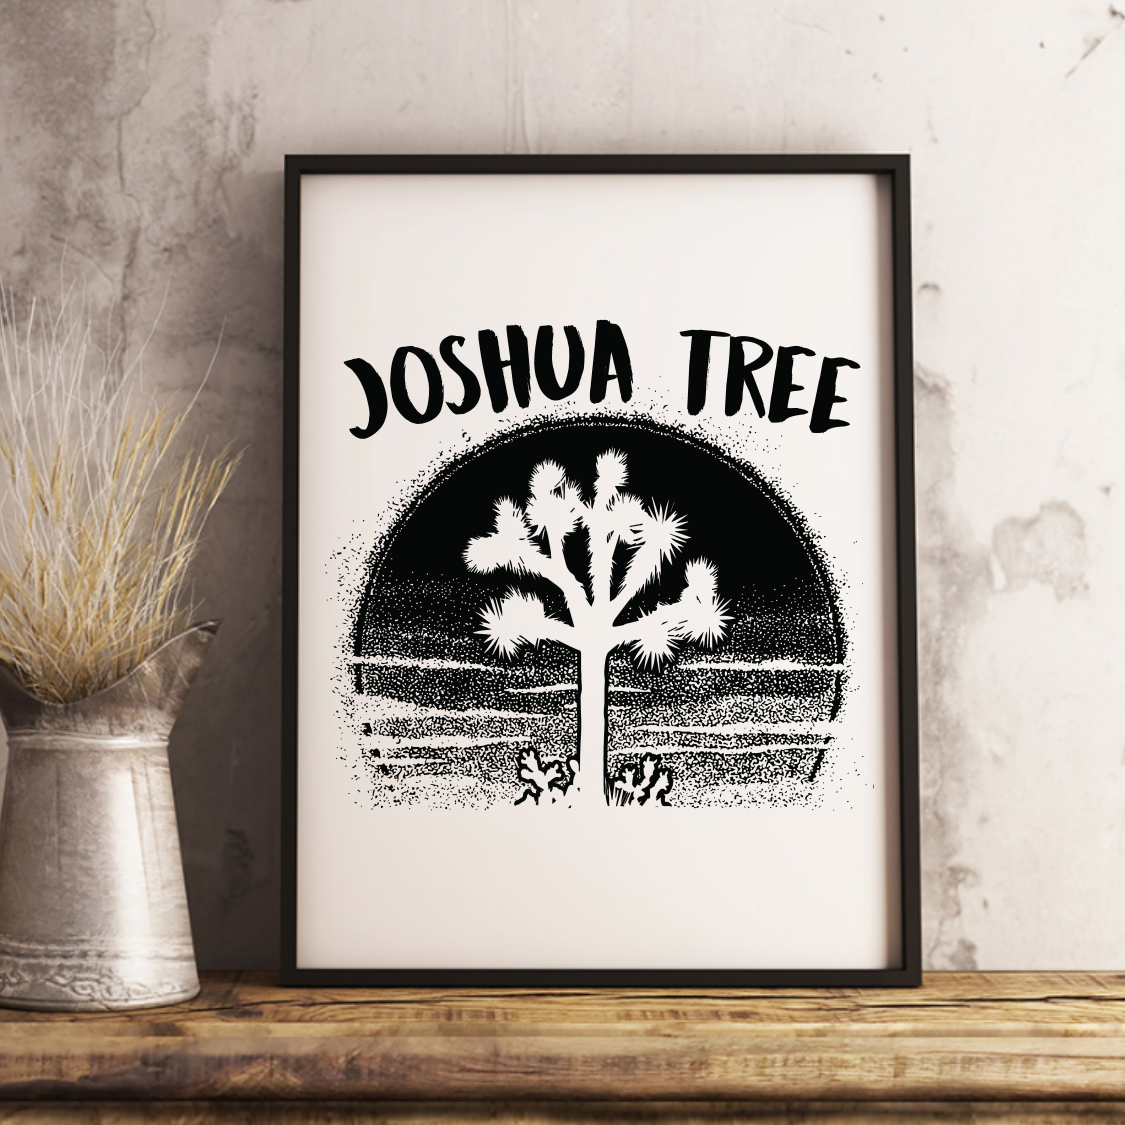 Joshua Tree 13 x 19 Poster Print